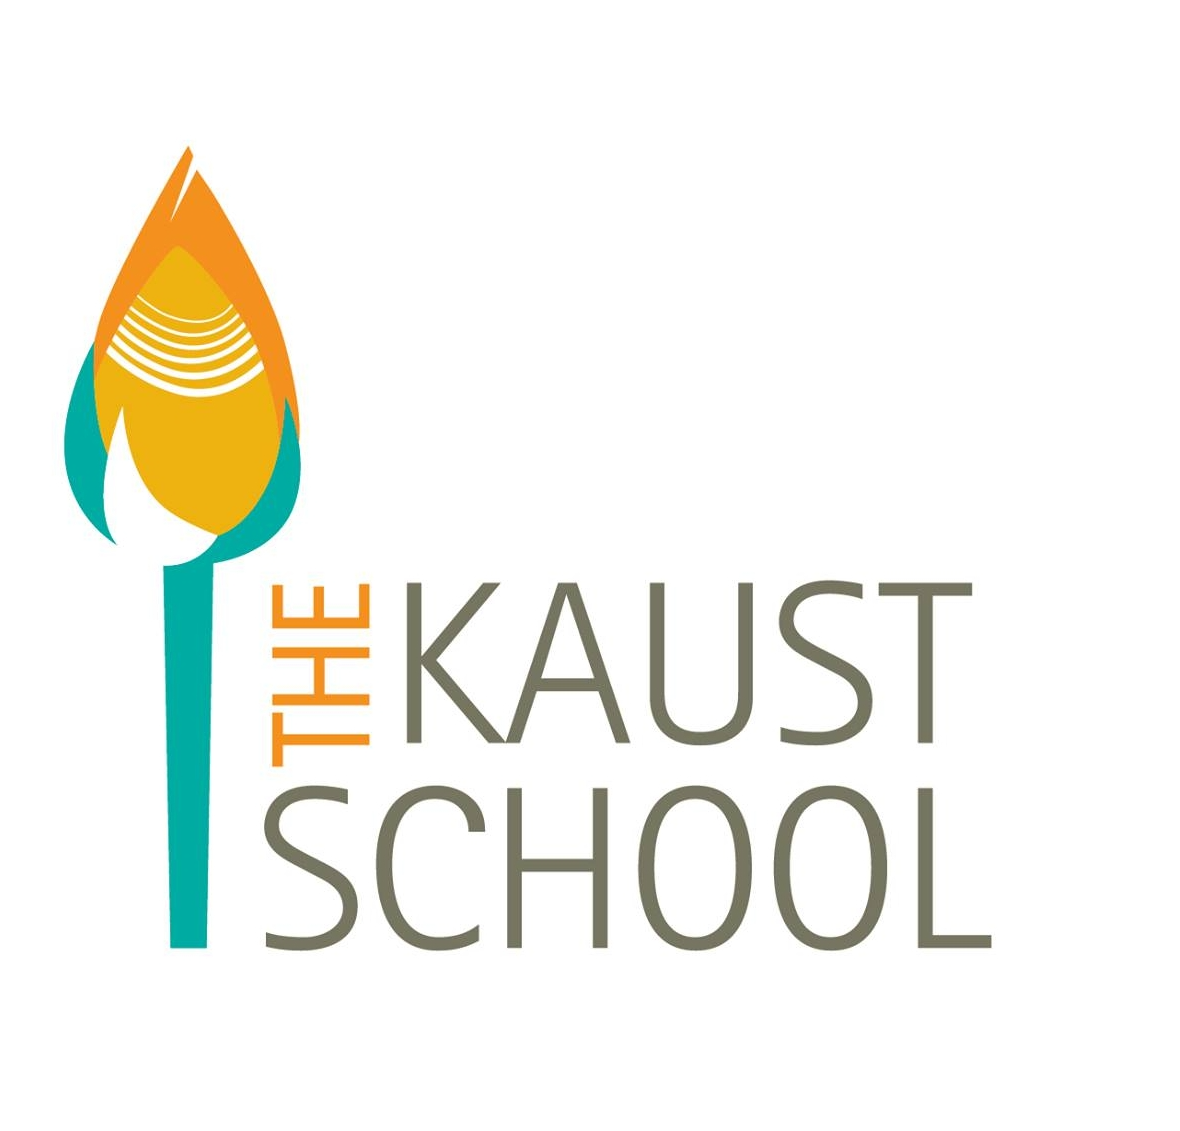 The KAUST School Logo